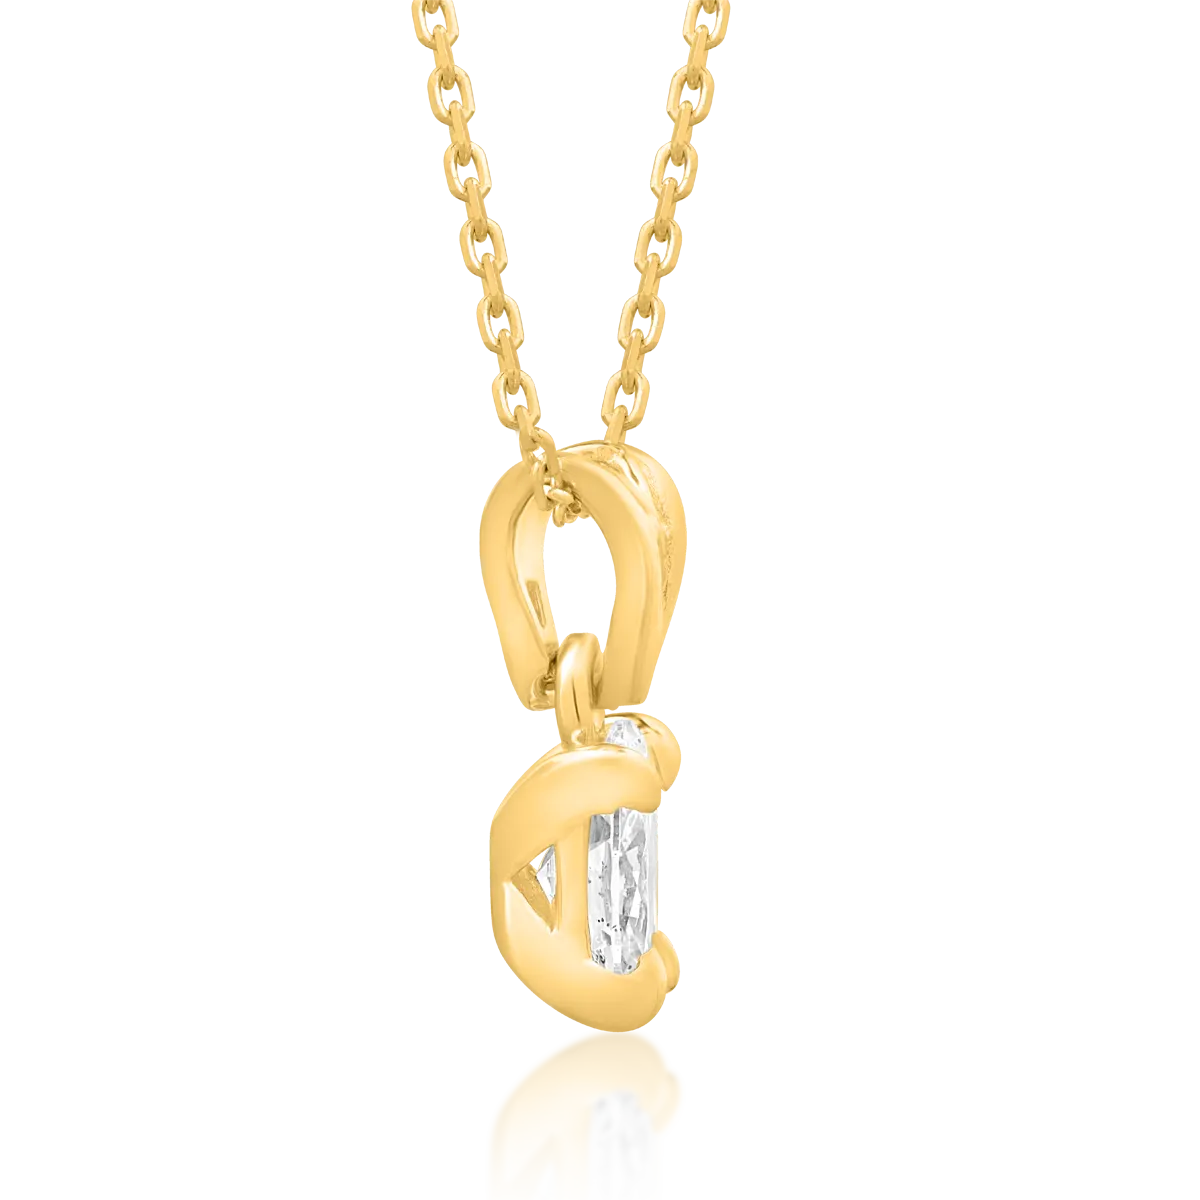 18K yellow gold pendant chain with 0.4ct diamond